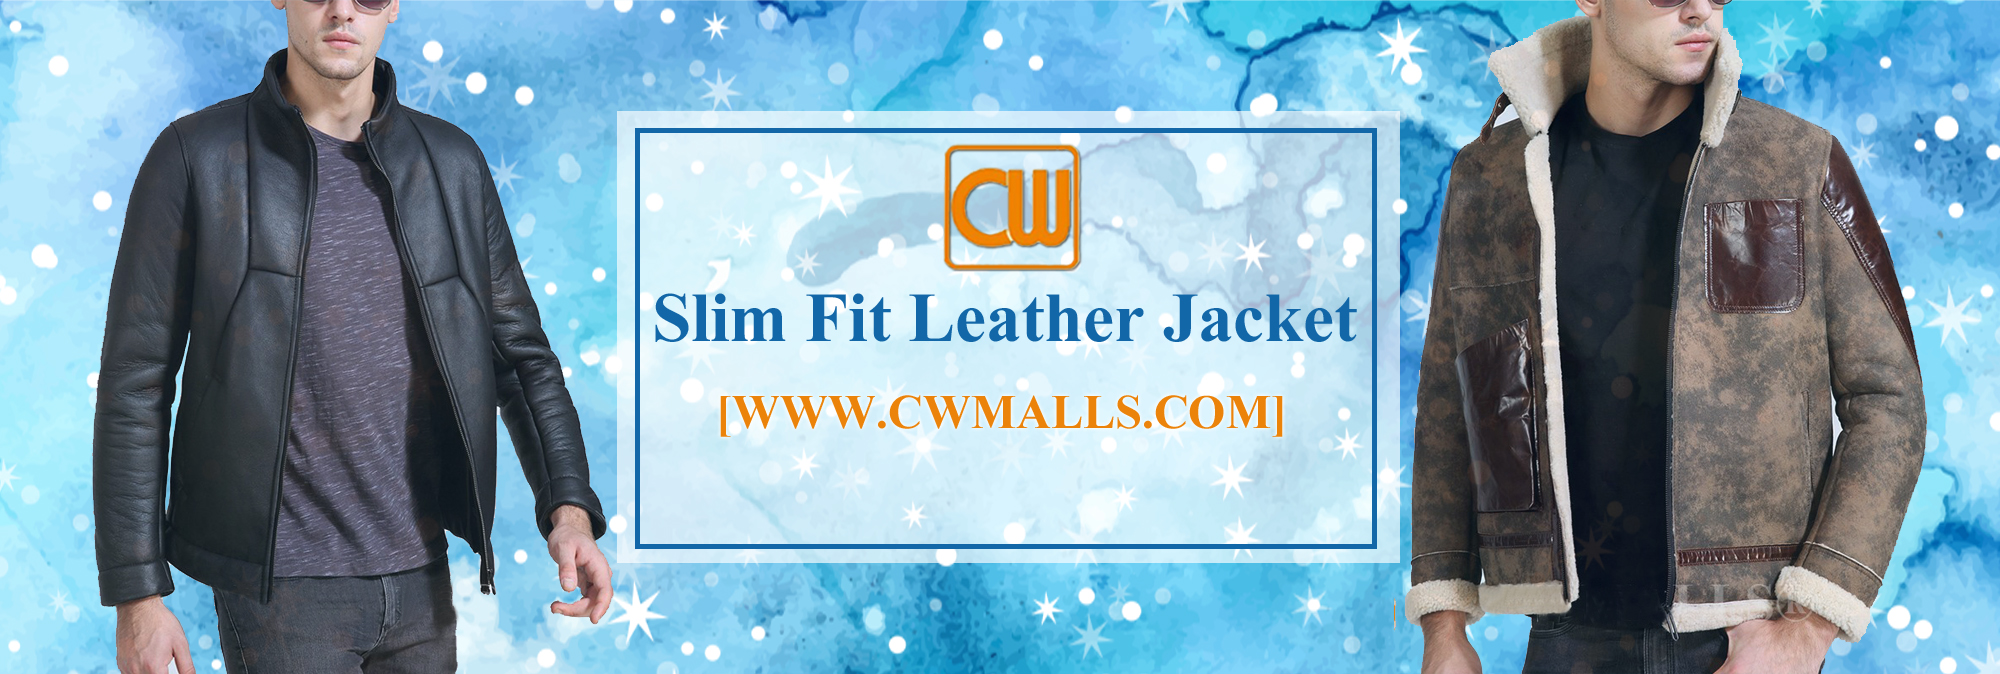 CWMALLS Slim Fit Leather Jacket